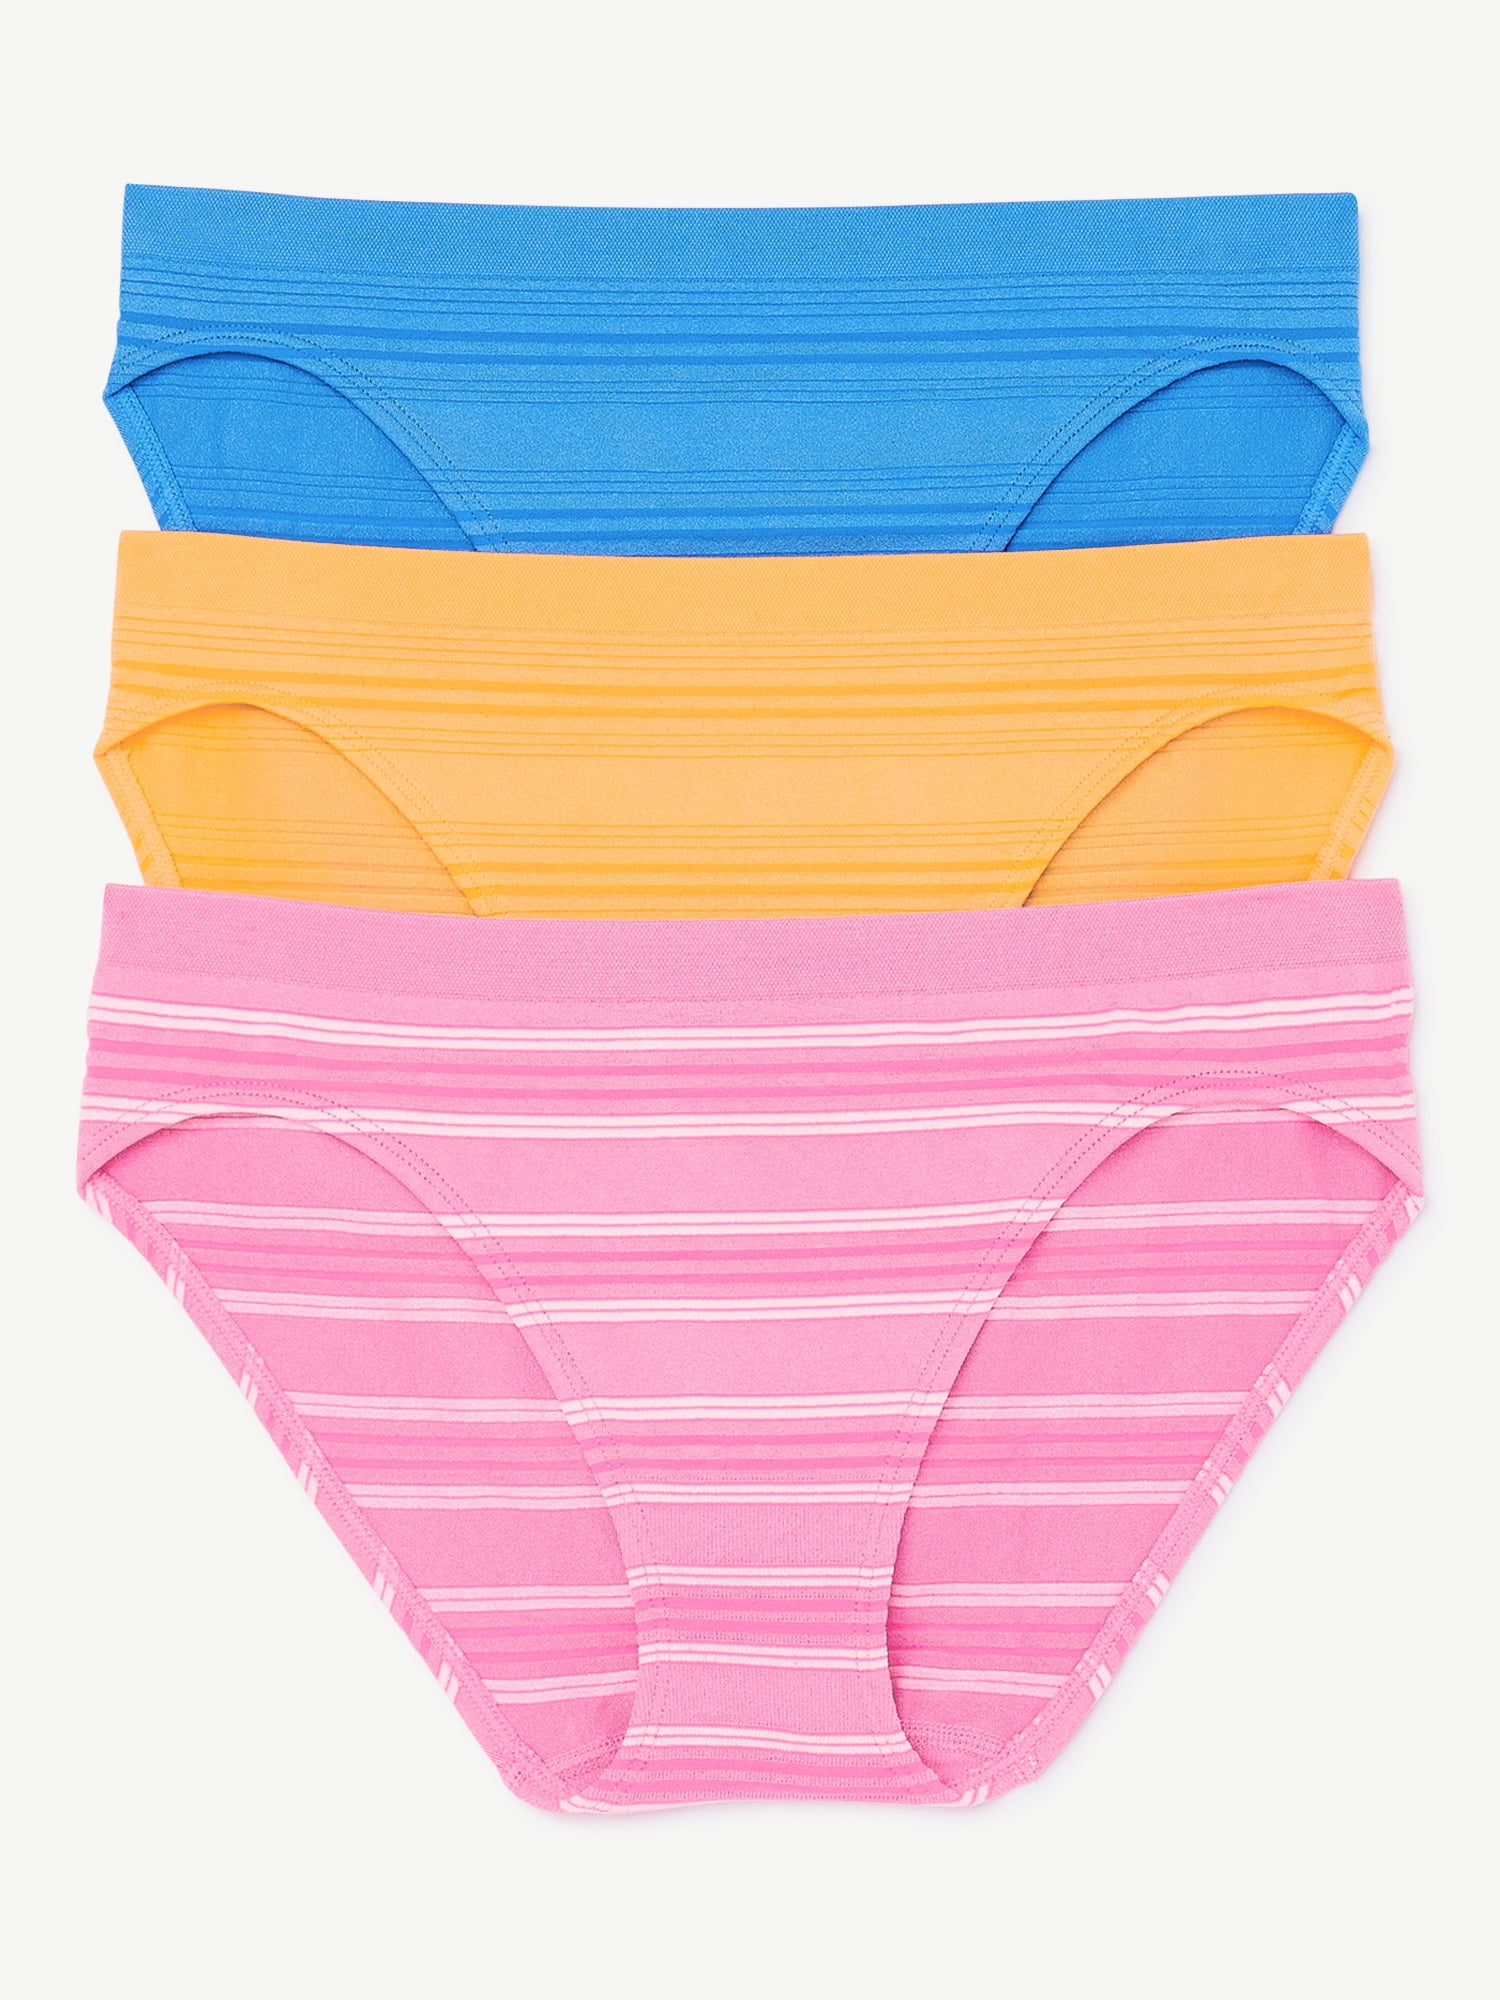 Joyspun Women s Seamless Boyshort Panties 6-Pack Sizes to 3XL